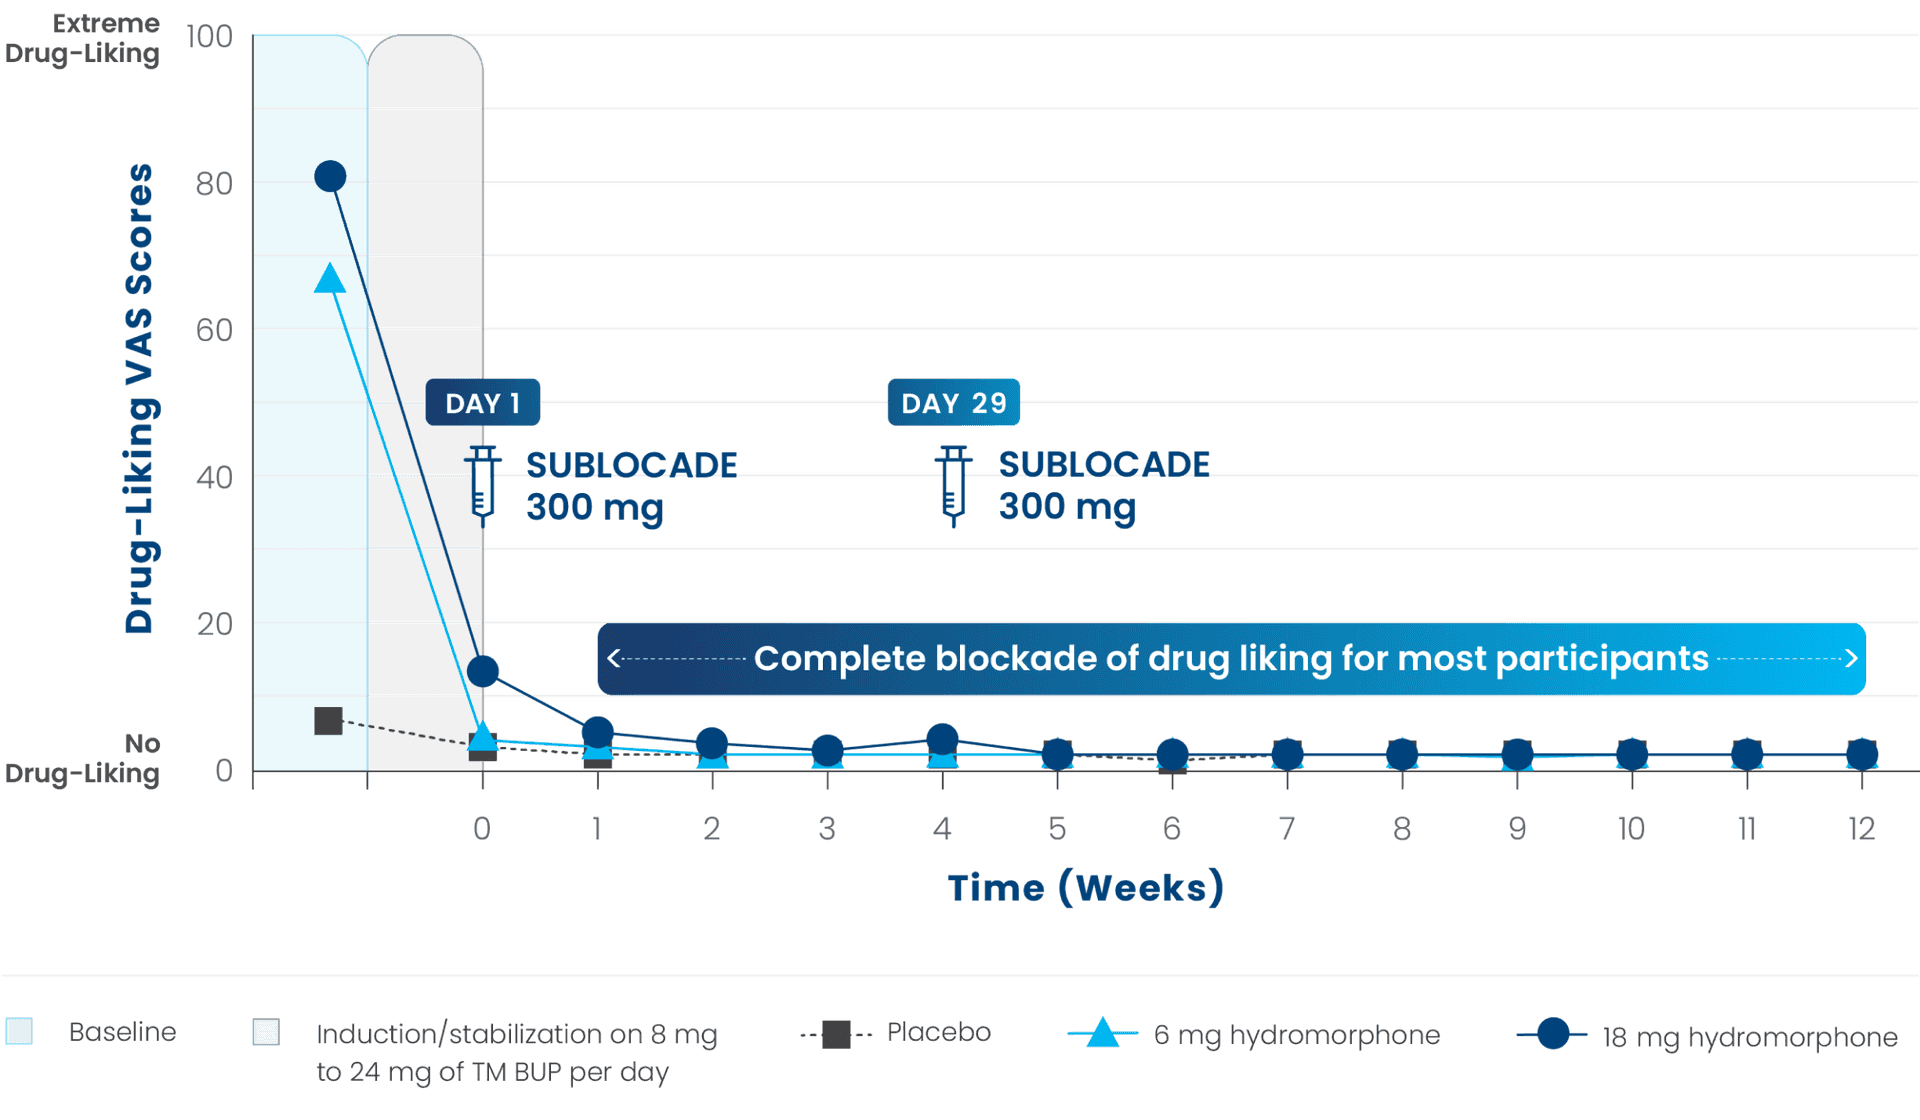 Image of graph depicting Median Peak Drug-Liking VAS Scores